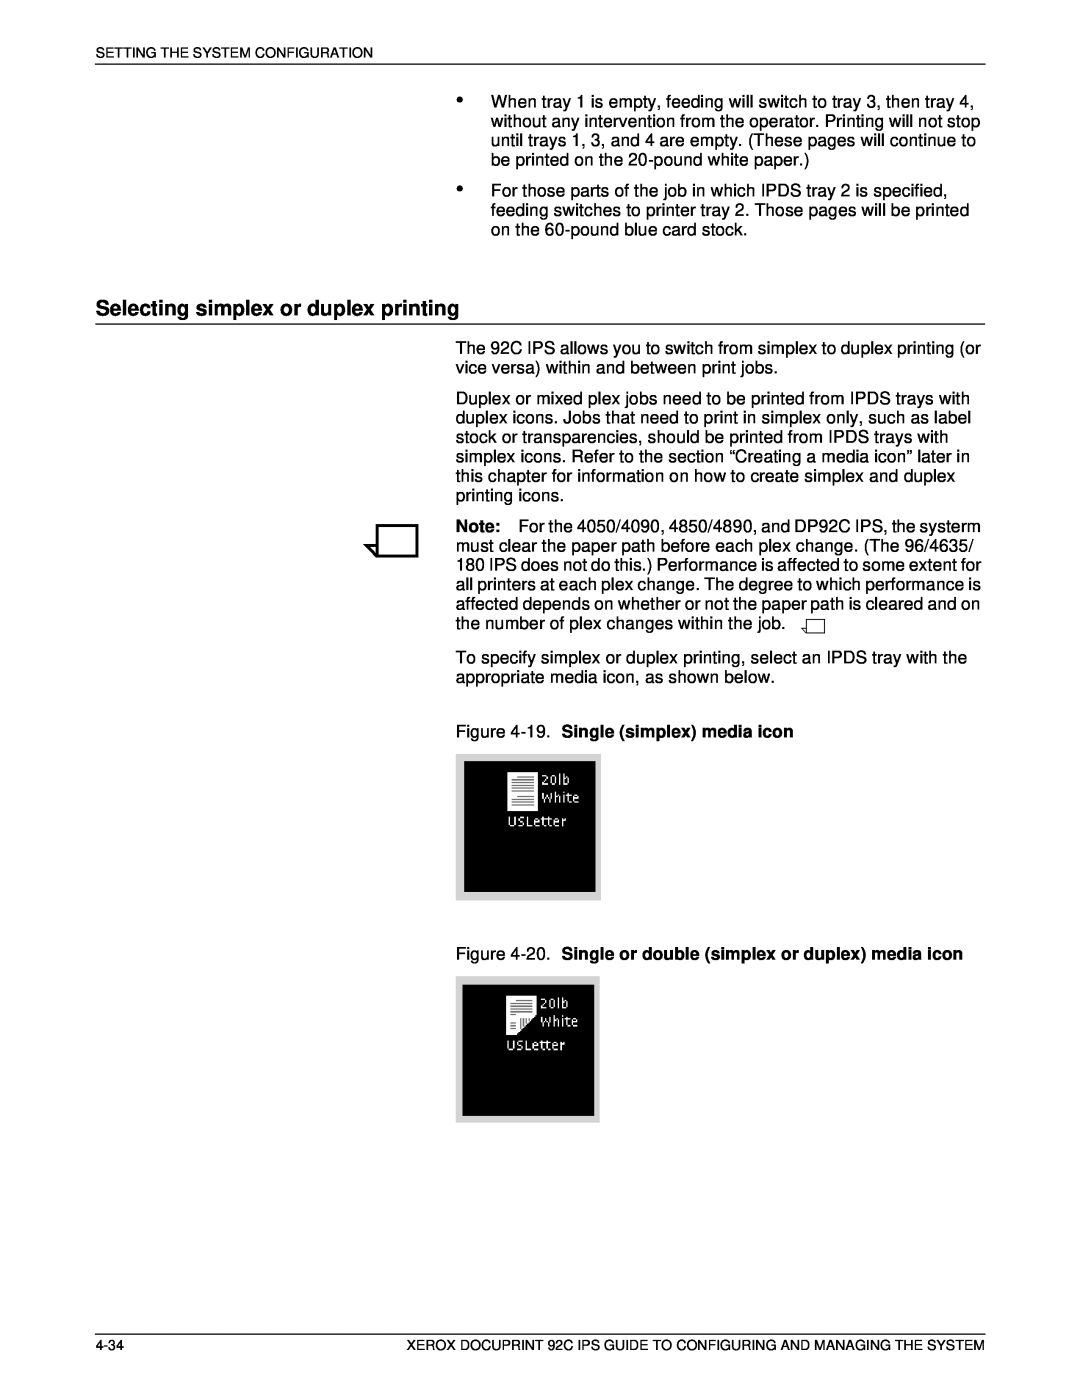 Xerox 92C IPS manual Selecting simplex or duplex printing, 19. Single simplex media icon 